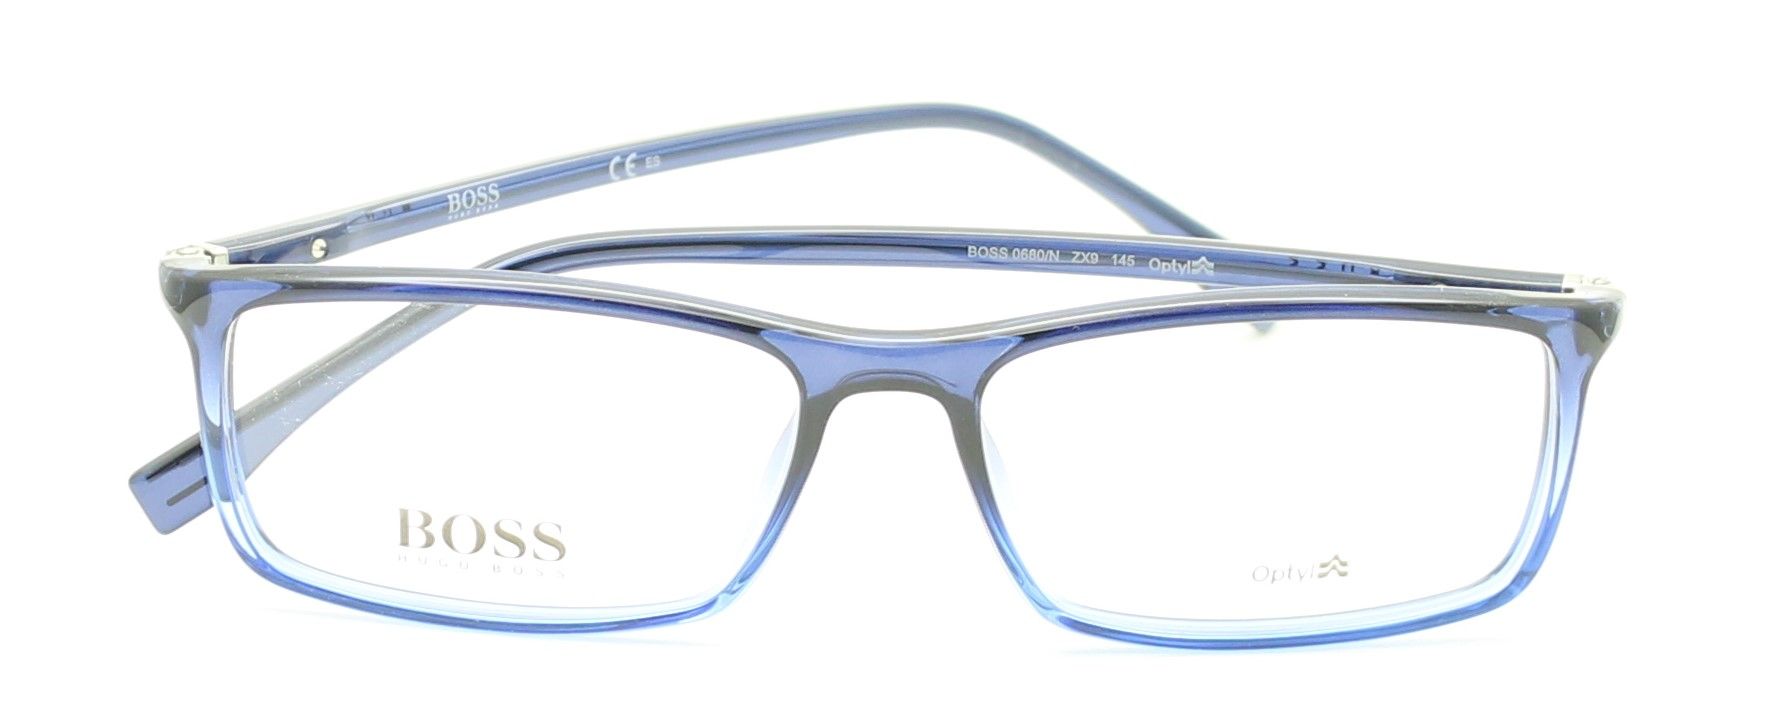 HUGO BOSS 0680/N ZX9 55mm Eyewear FRAMES Glasses ITALY RX Optical ...